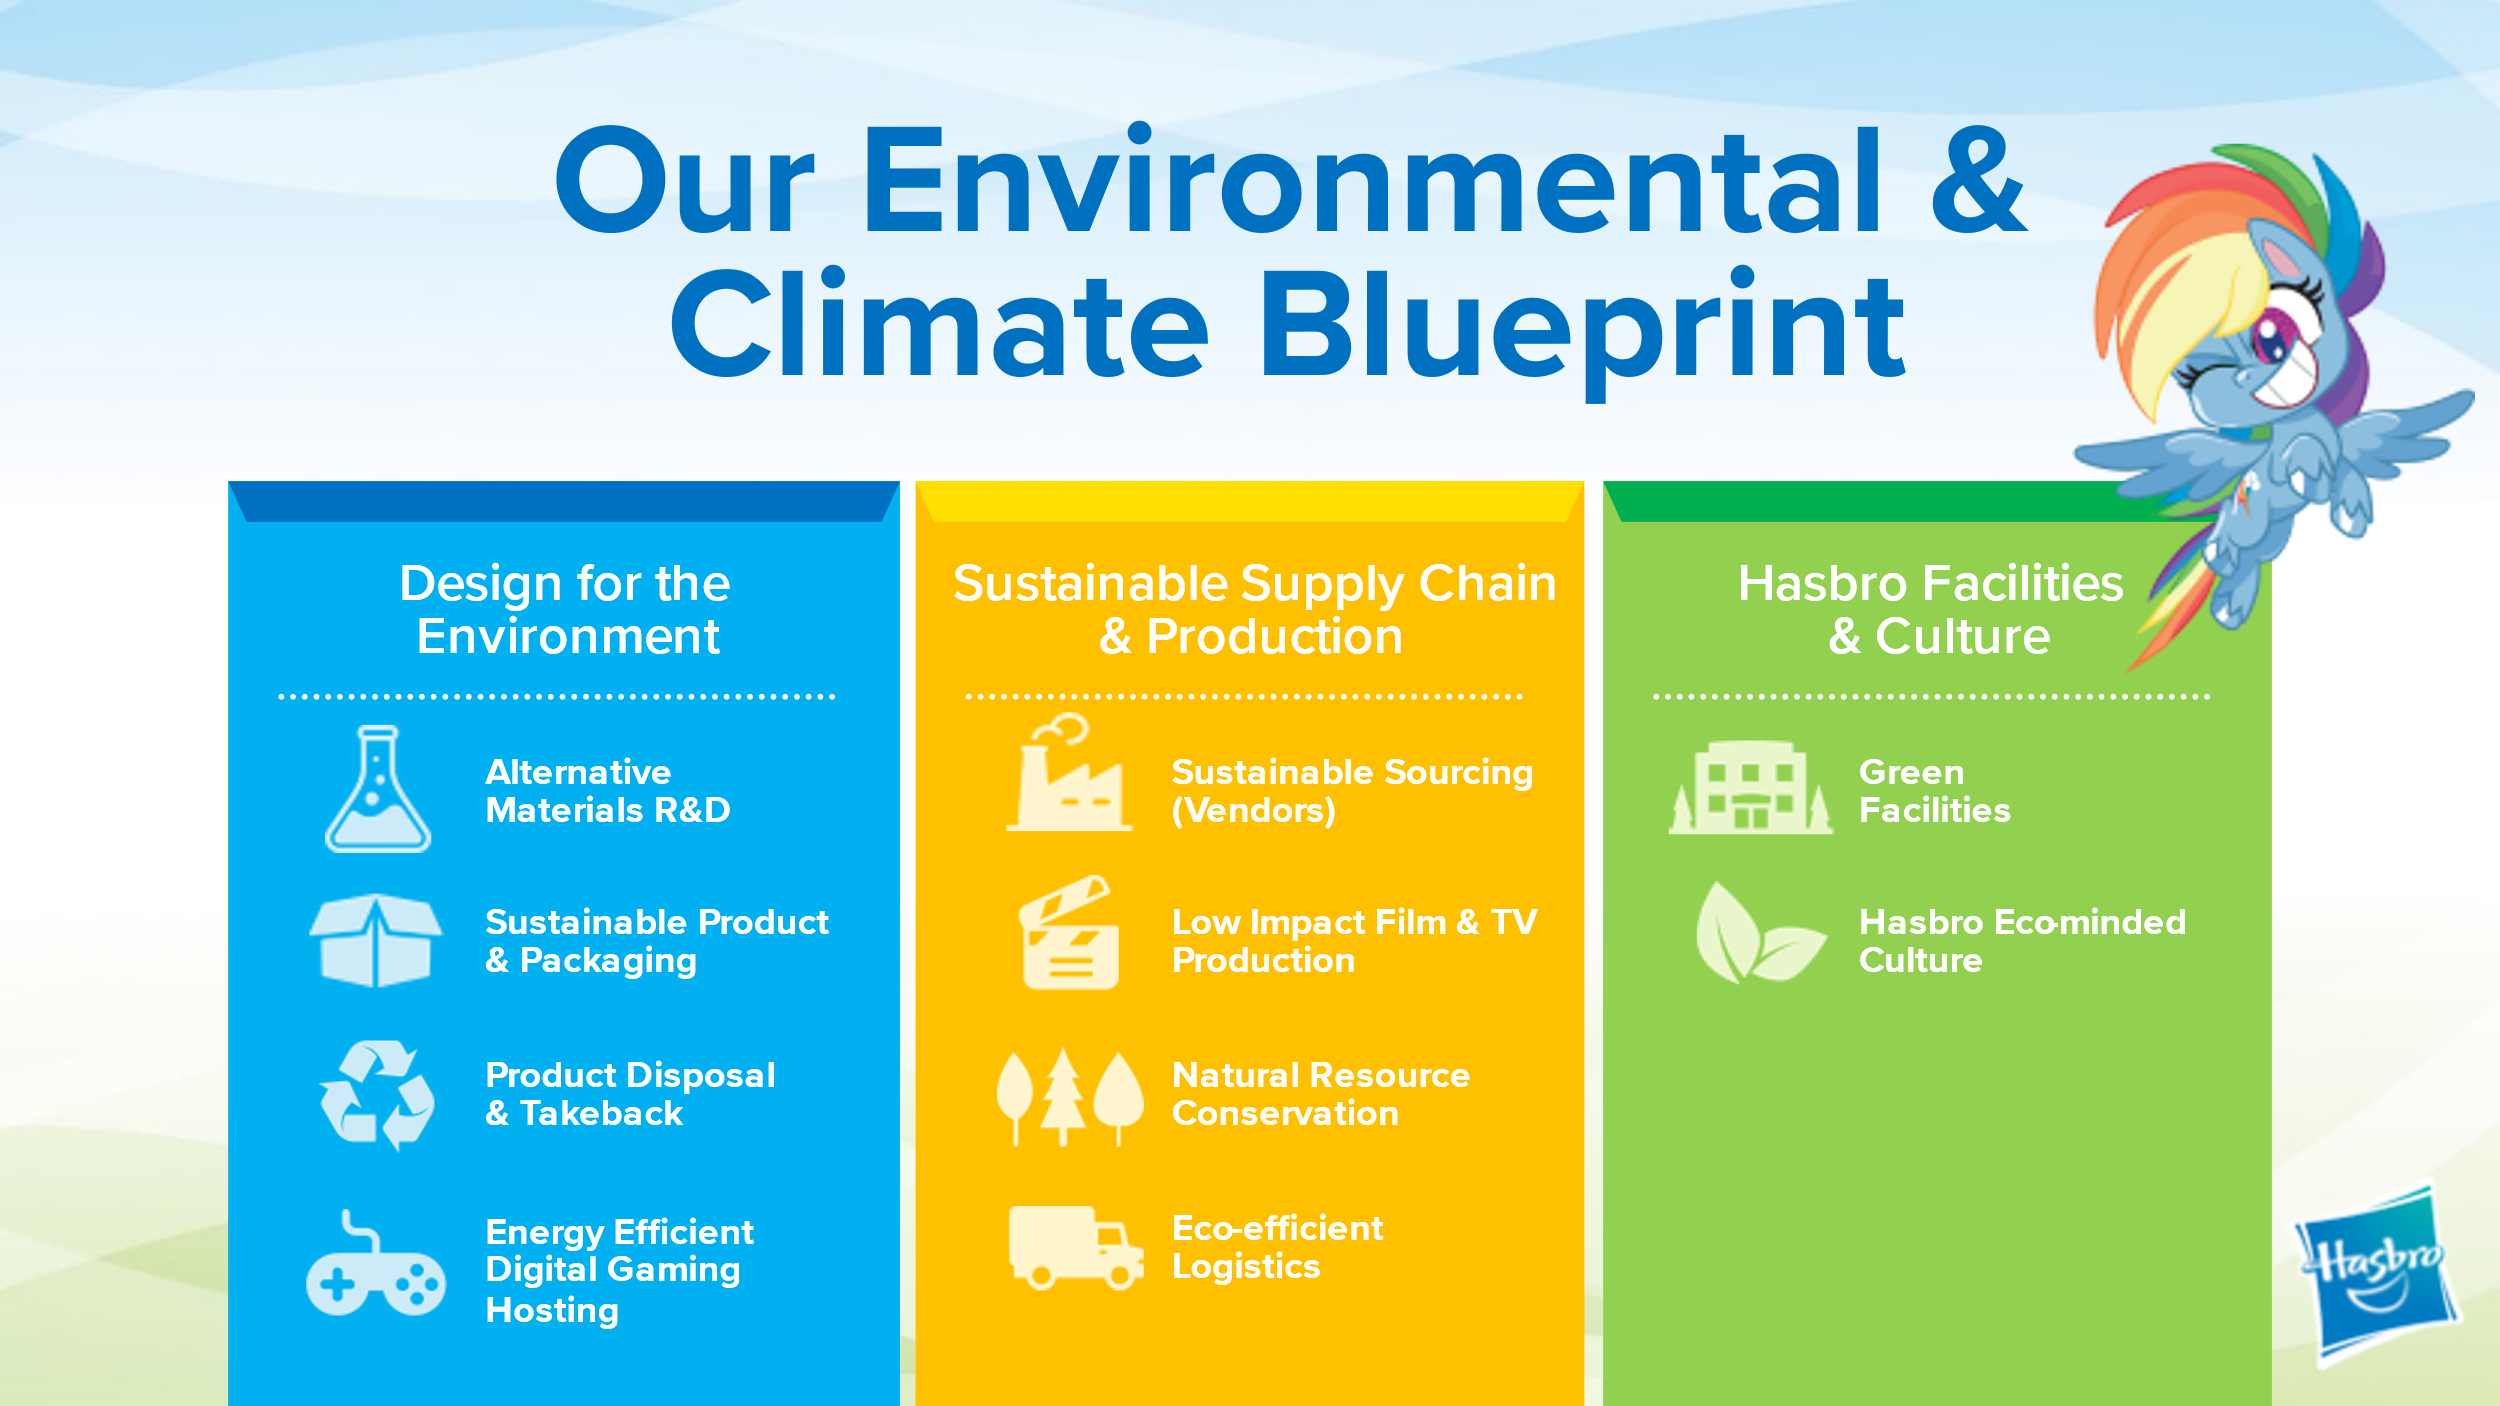 Our Environmental & Climate Blueprint